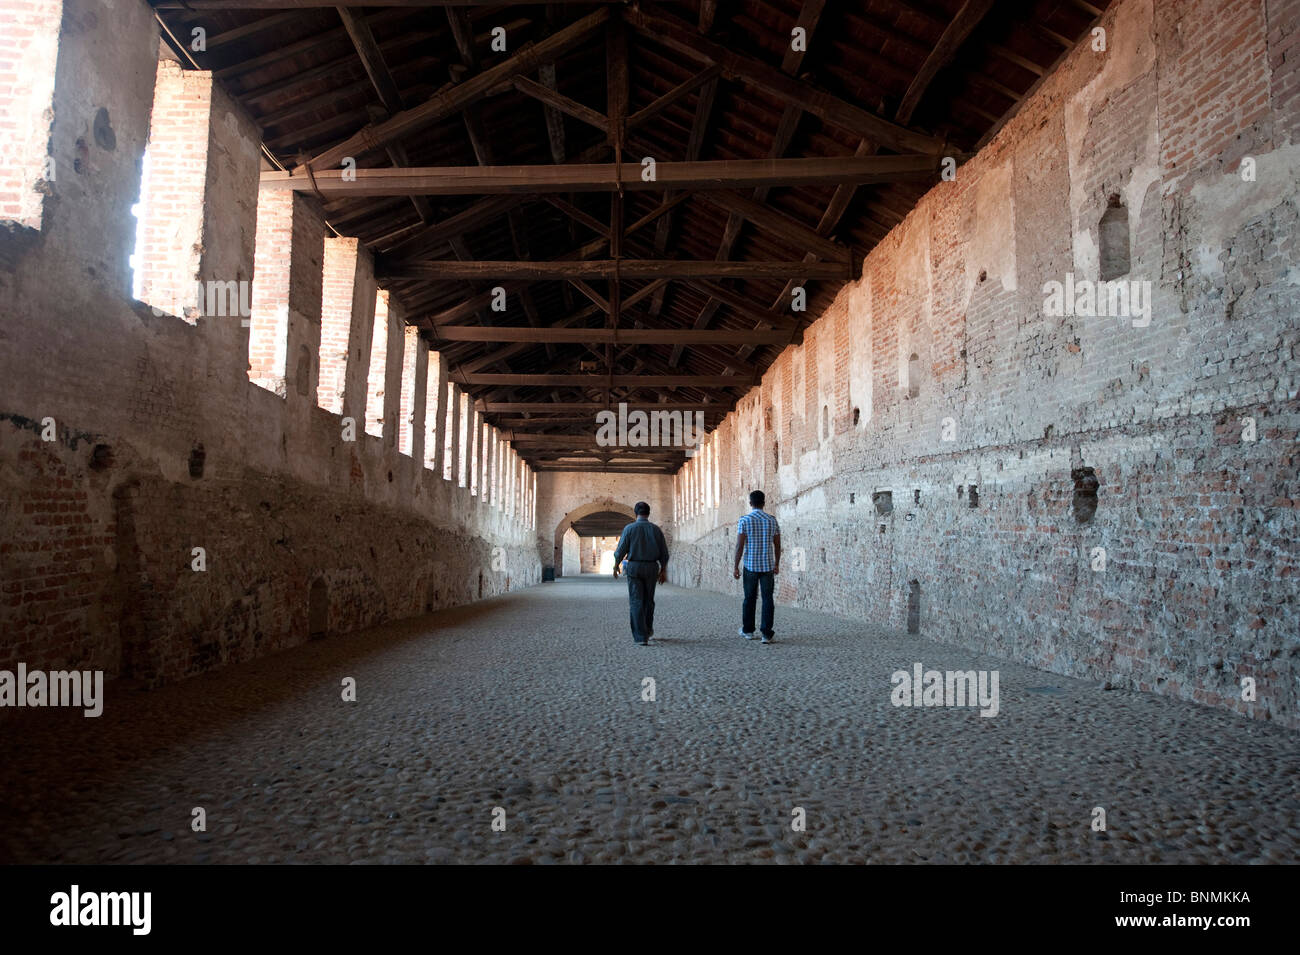 Castello visconteo sforzesco hi-res stock photography and images - Alamy